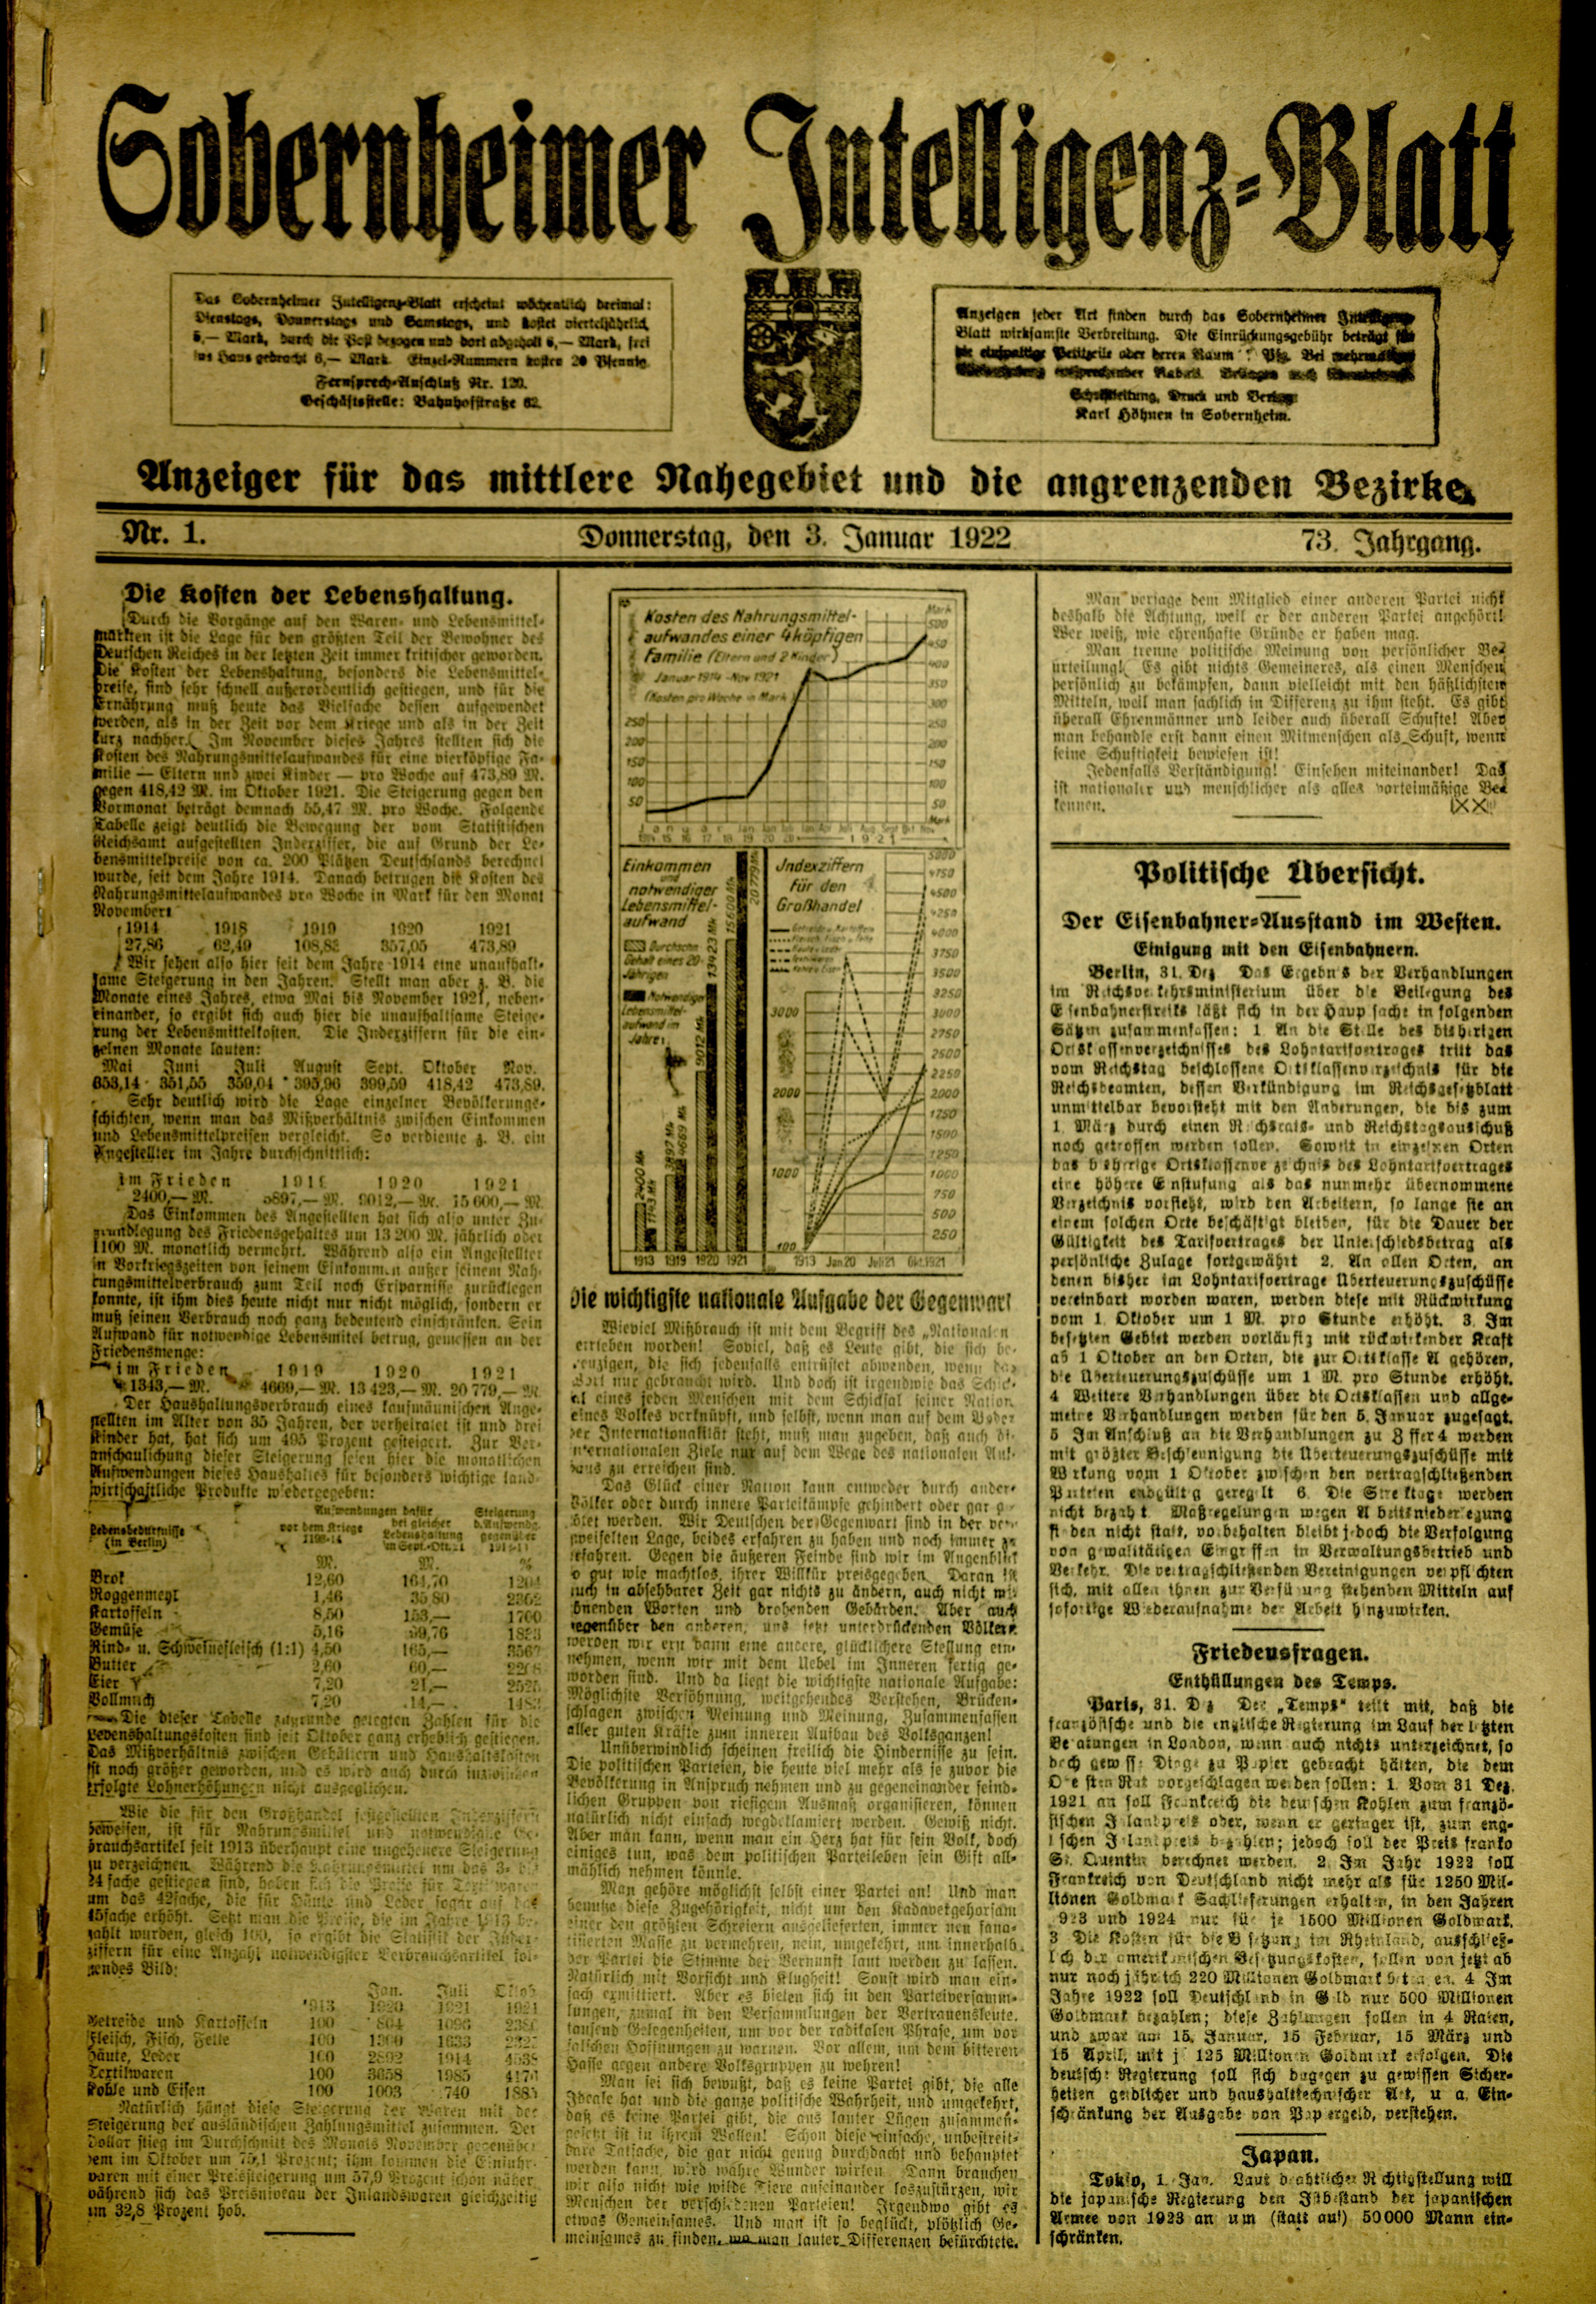 Zeitung: Sobernheimer Intelligenzblatt; Januar 1922, Jg. 73 Nr. 1 (Heimatmuseum Bad Sobernheim CC BY-NC-SA)